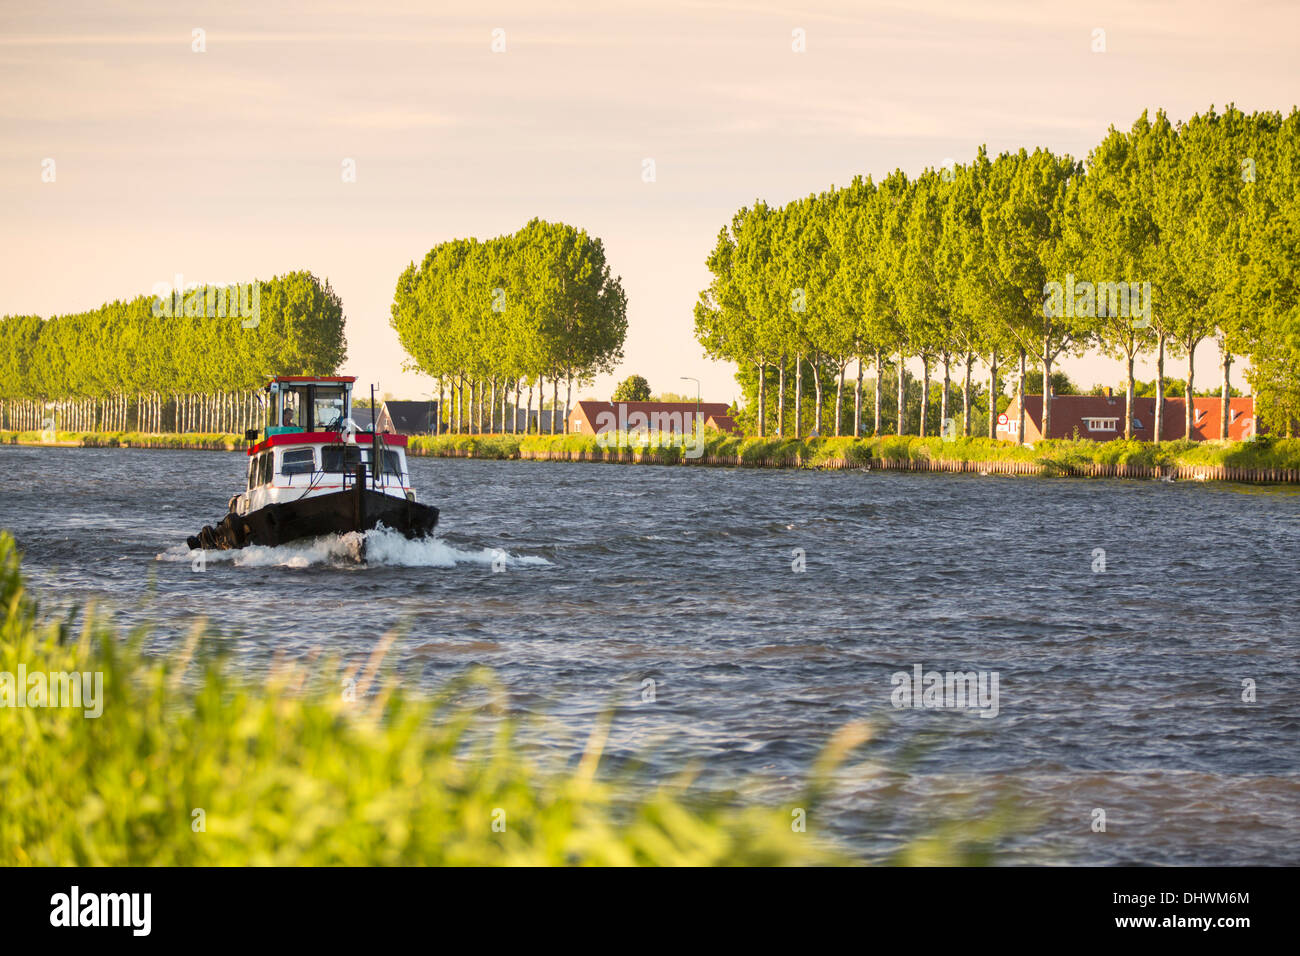 Niederlande, Loenersloot. Amsterdam-Rijn Kanaal Kanal bezeichnet Kleines Boot. Stockfoto